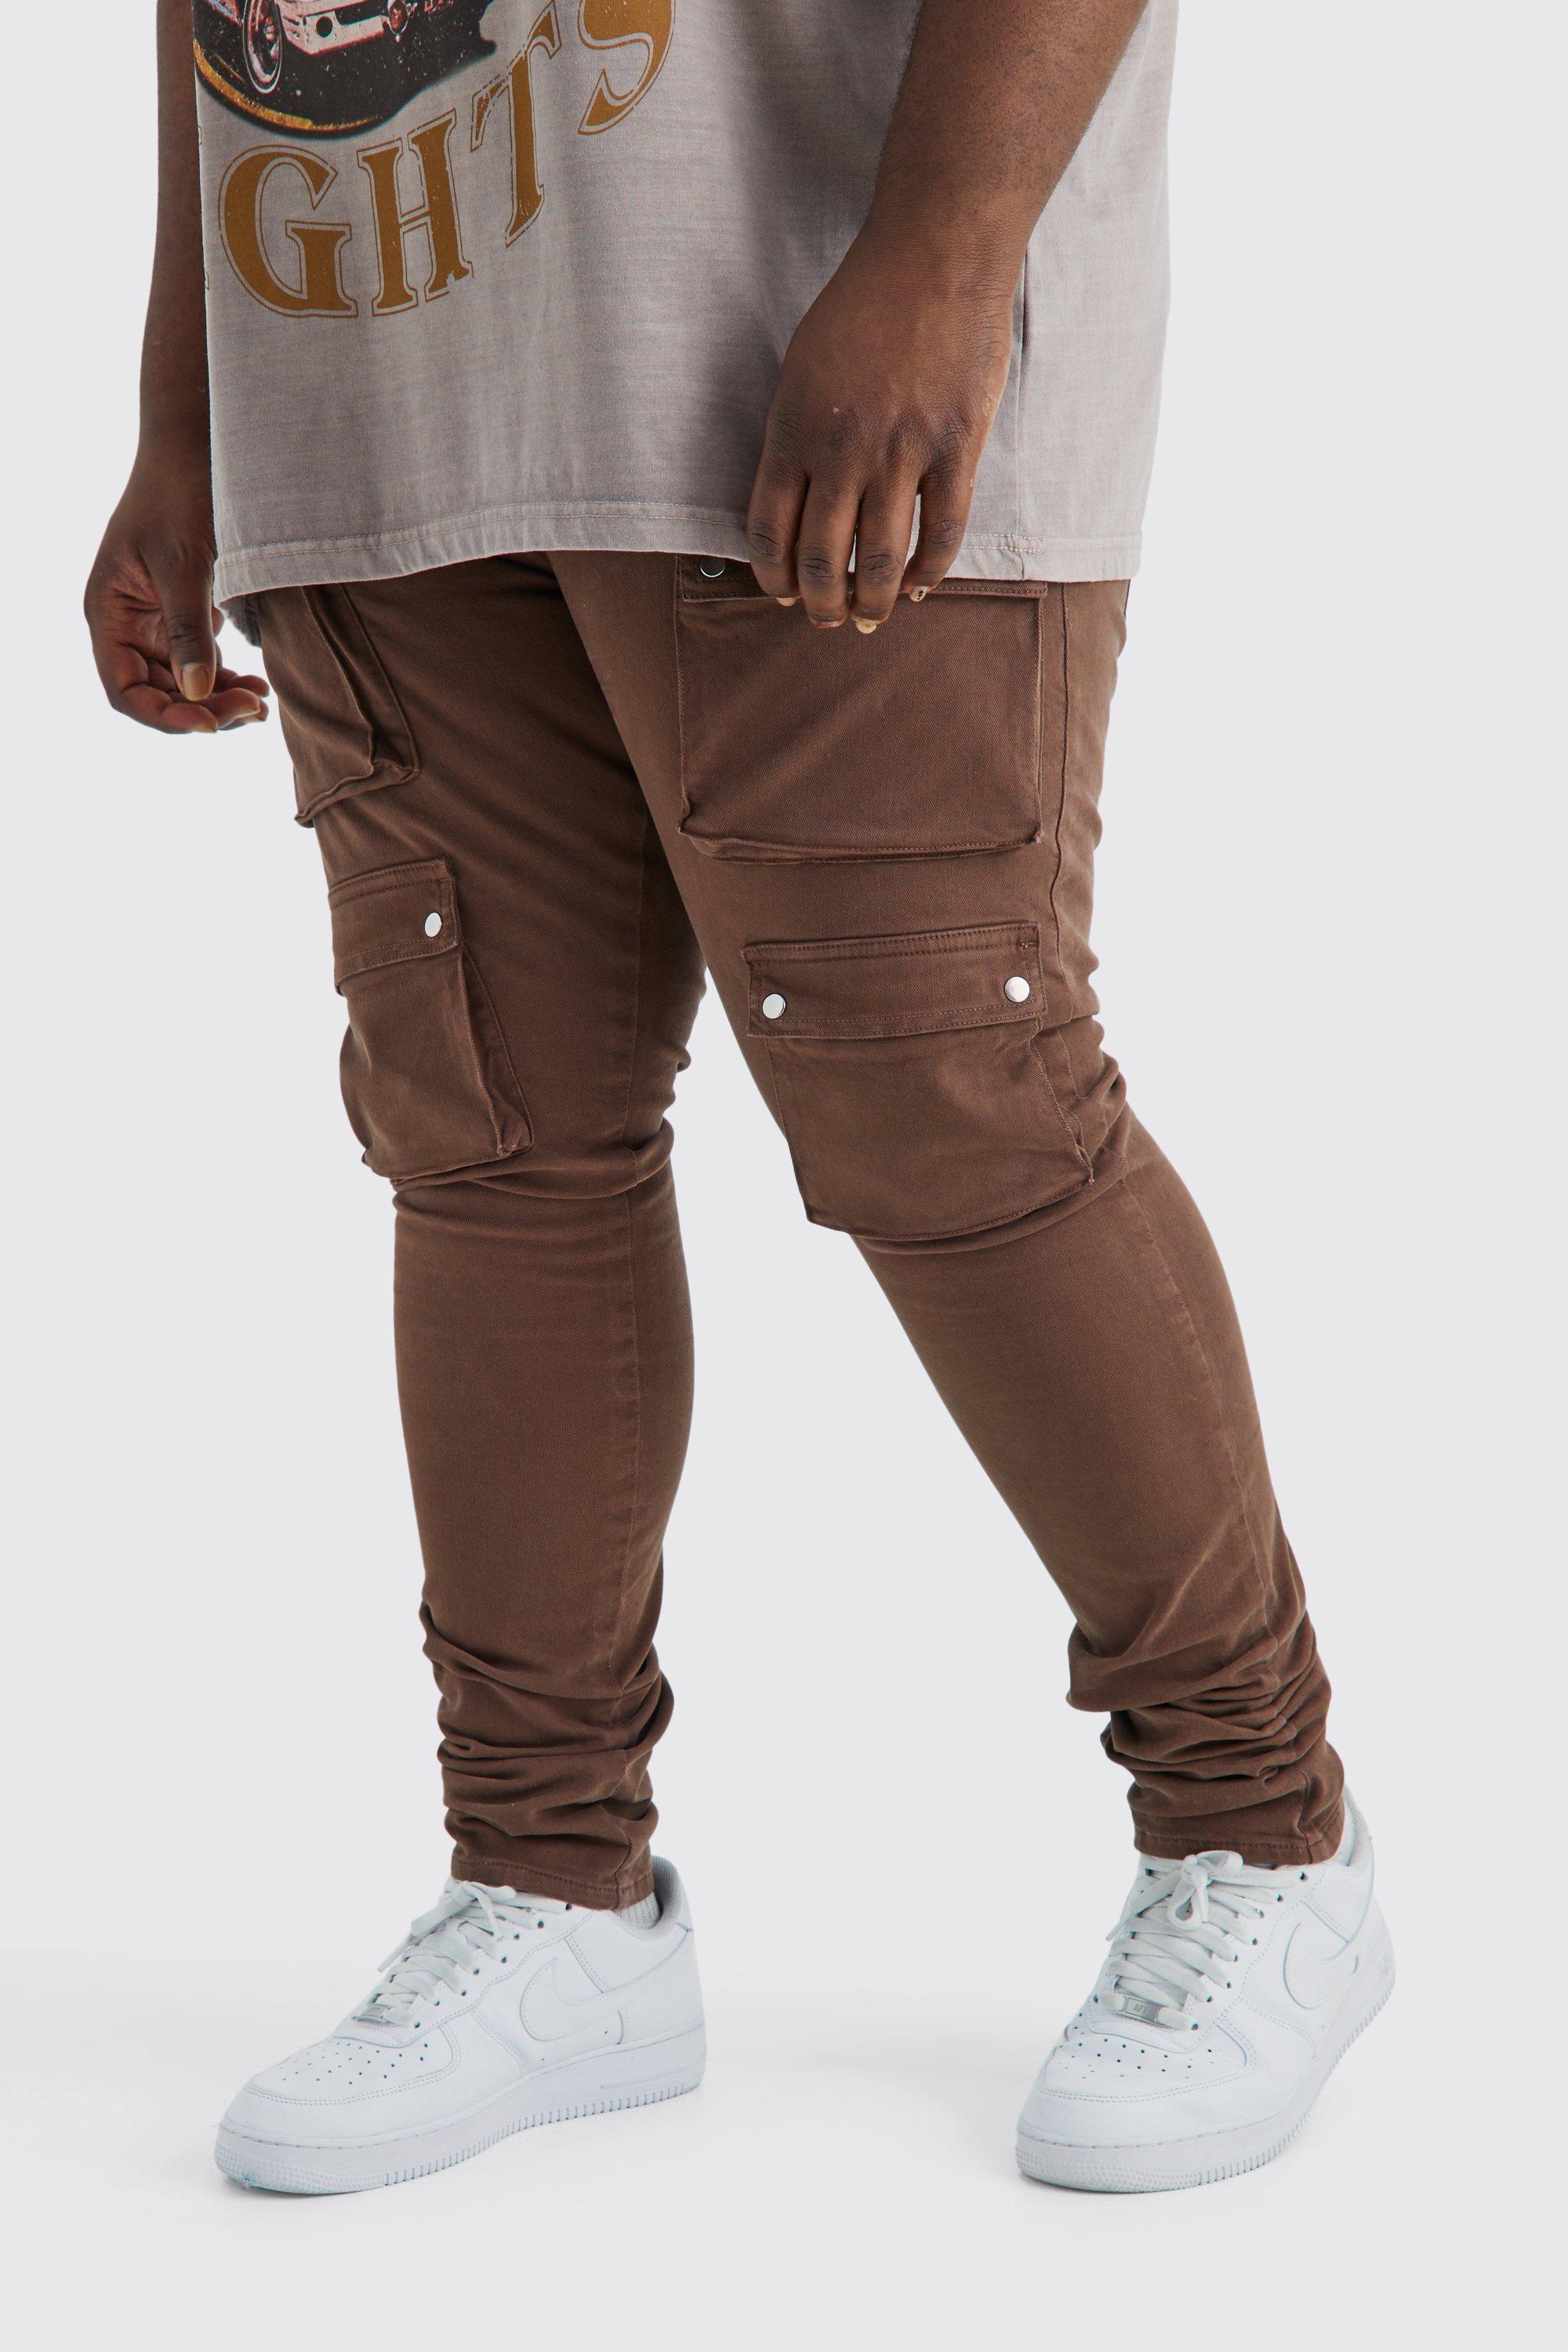 grande taille - pantalon cargo skinny à poches multiples homme - brun - 46, brun